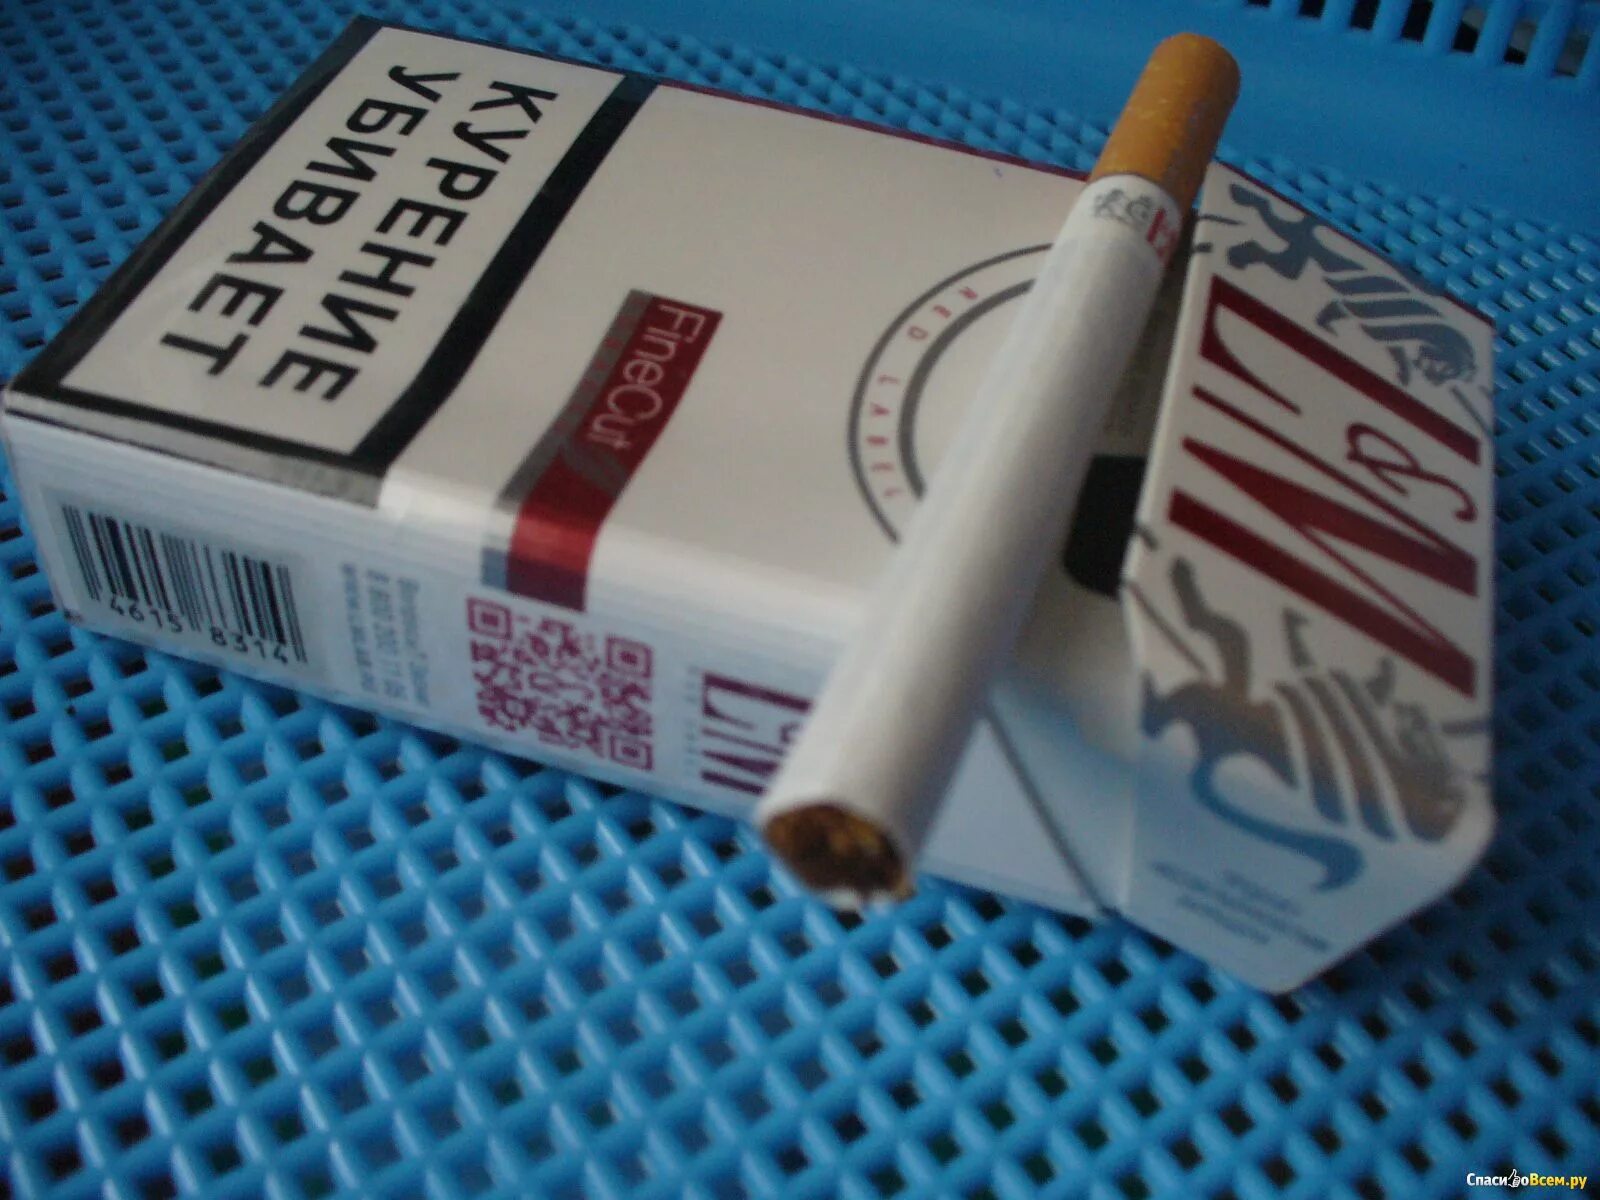 Сигареты LM Red Label. Сигареты LM красный МРЦ. Сигареты LM Red Compact. L M сигареты красные.